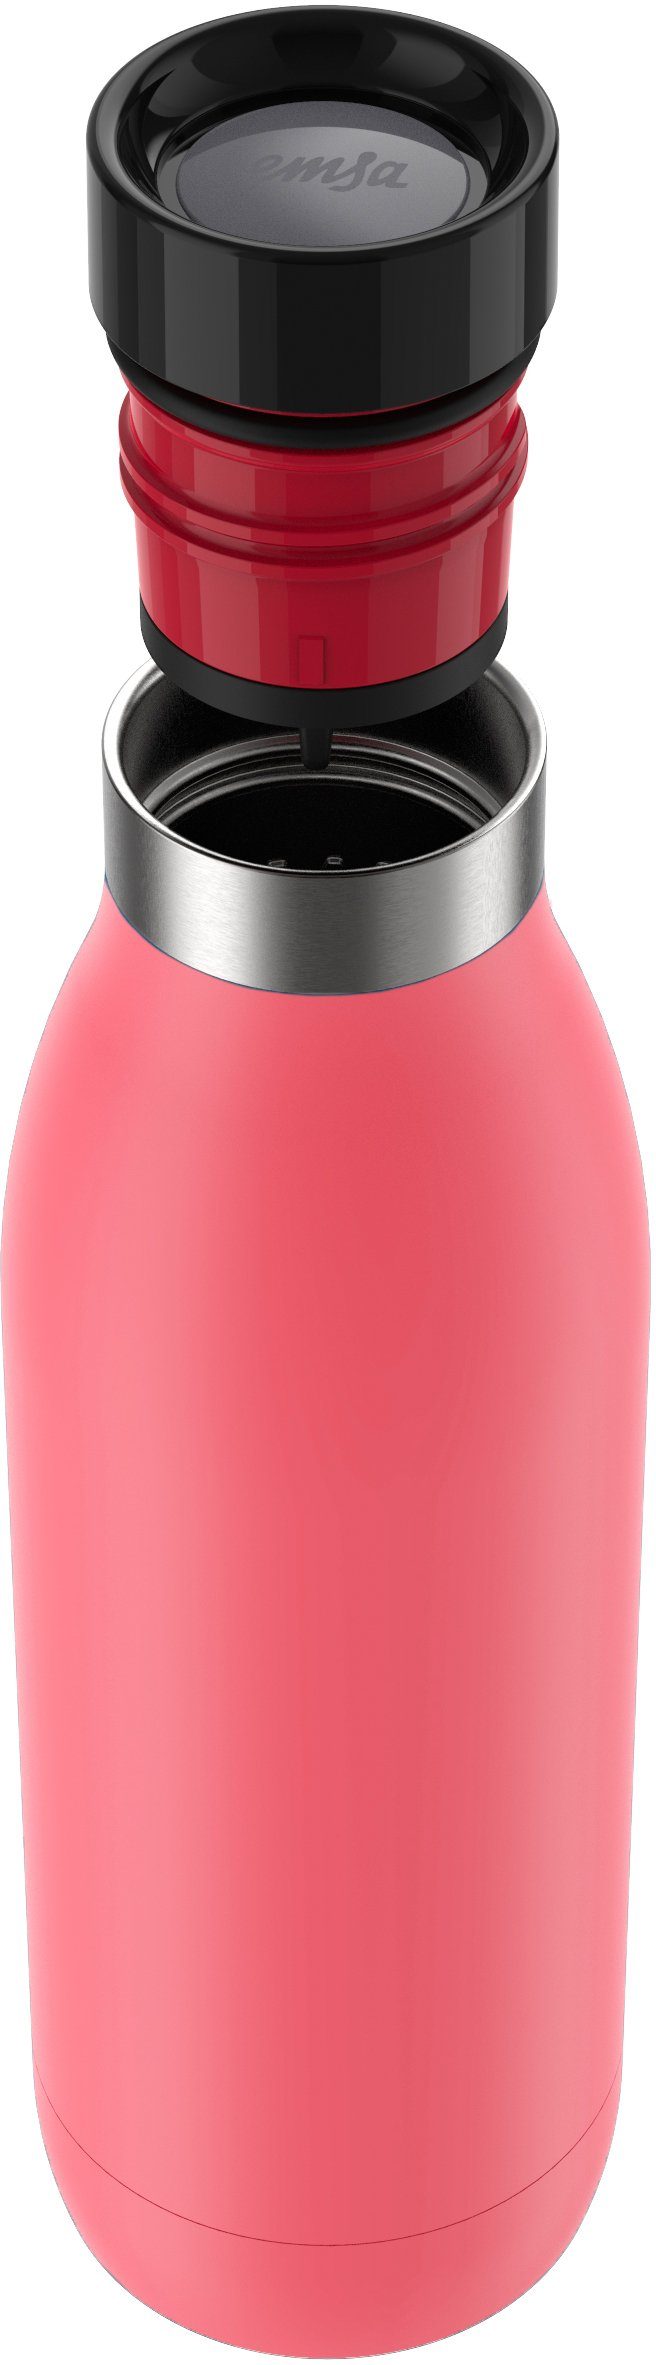 Emsa Trinkflasche Bludrop Color, 12h spülmaschinenfest Deckel, Quick-Press kühl, warm/24h Edelstahl, koralle